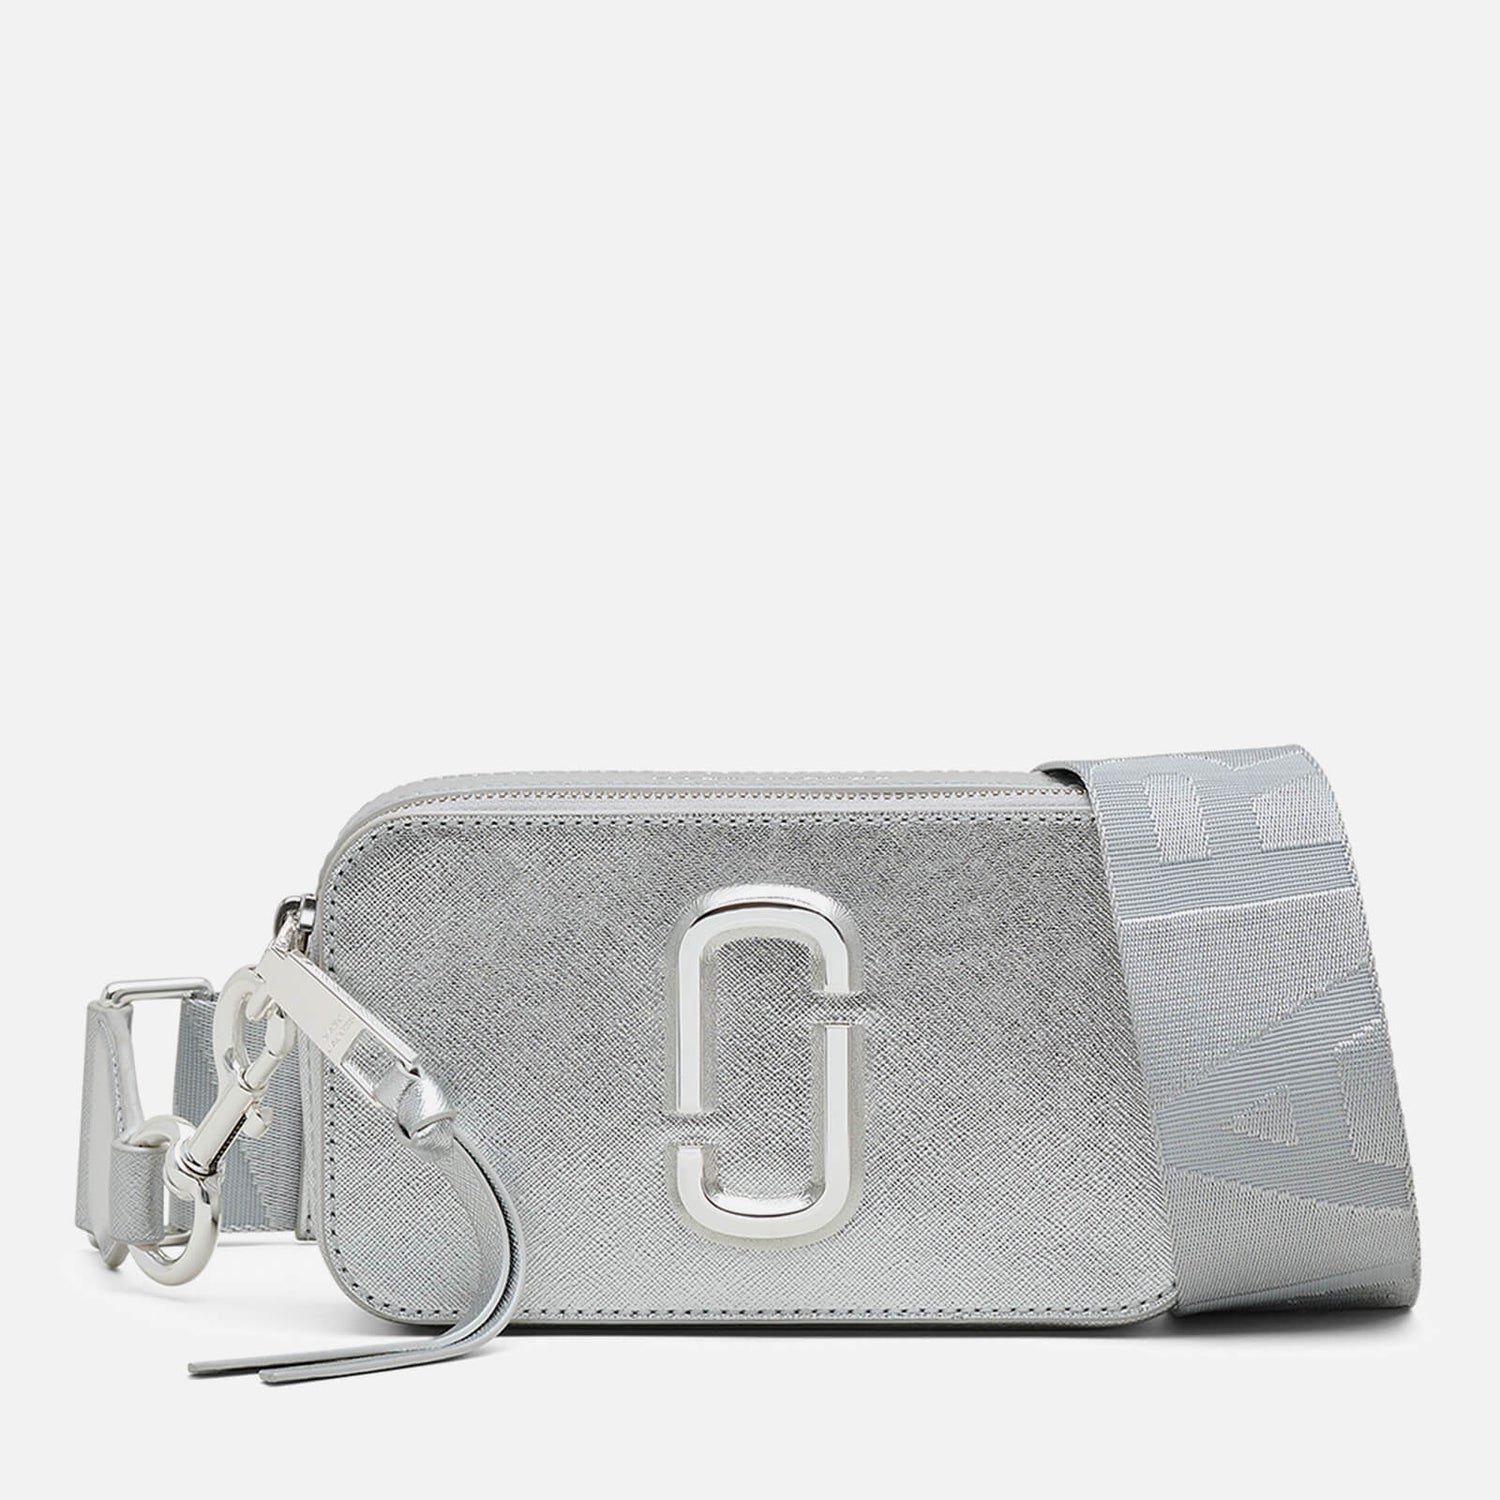 Marc Jacobs The DTM Metallic Snapshot Saffiano Leather Bag